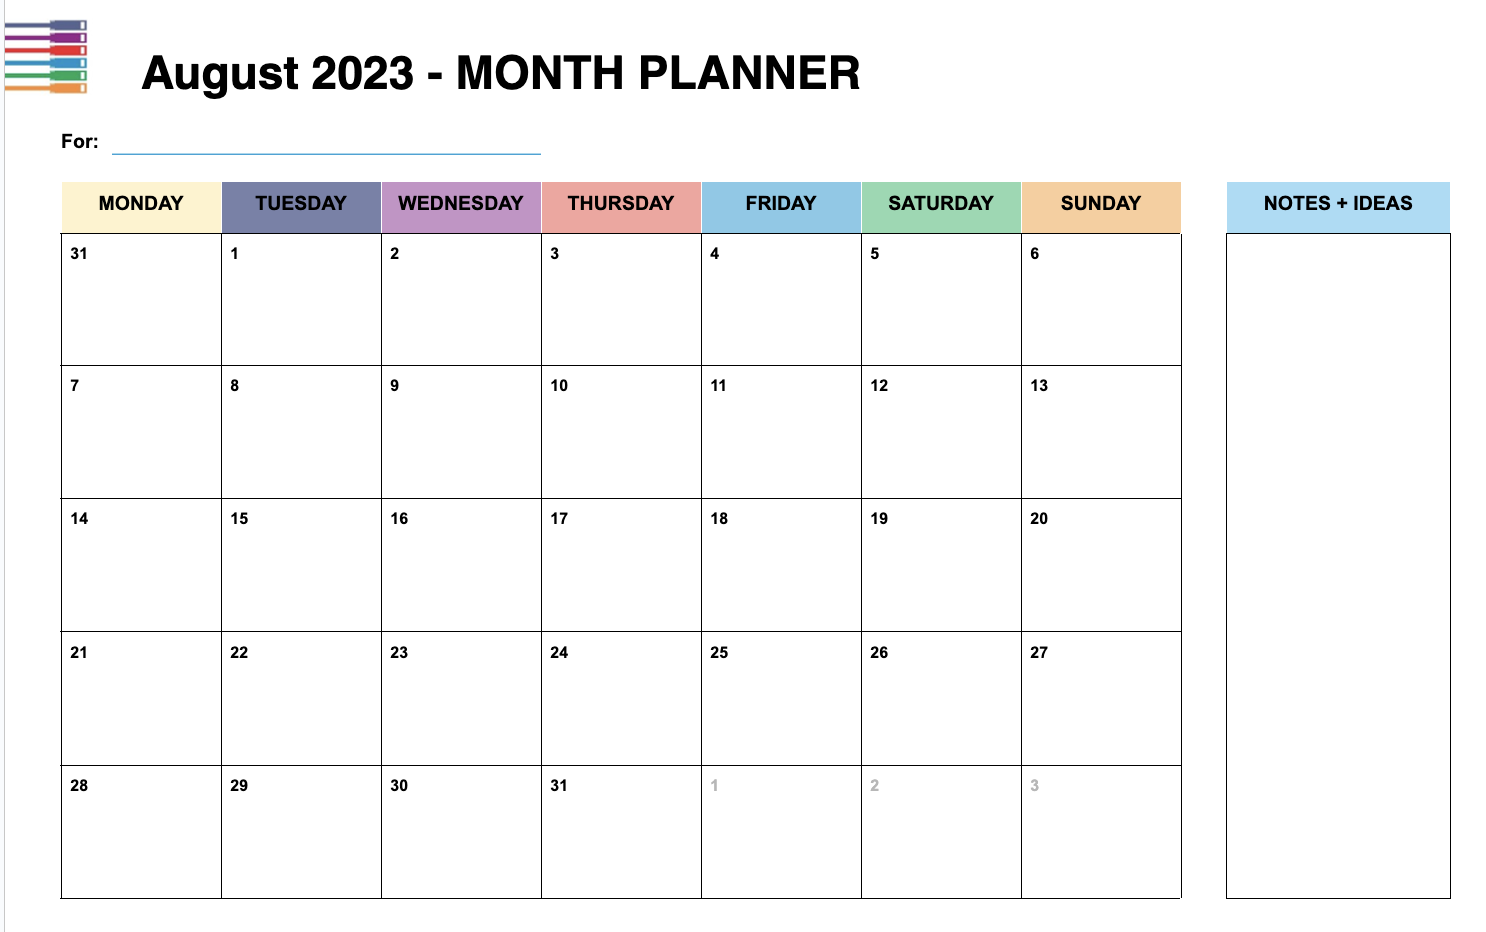 Aug 2023 Planner